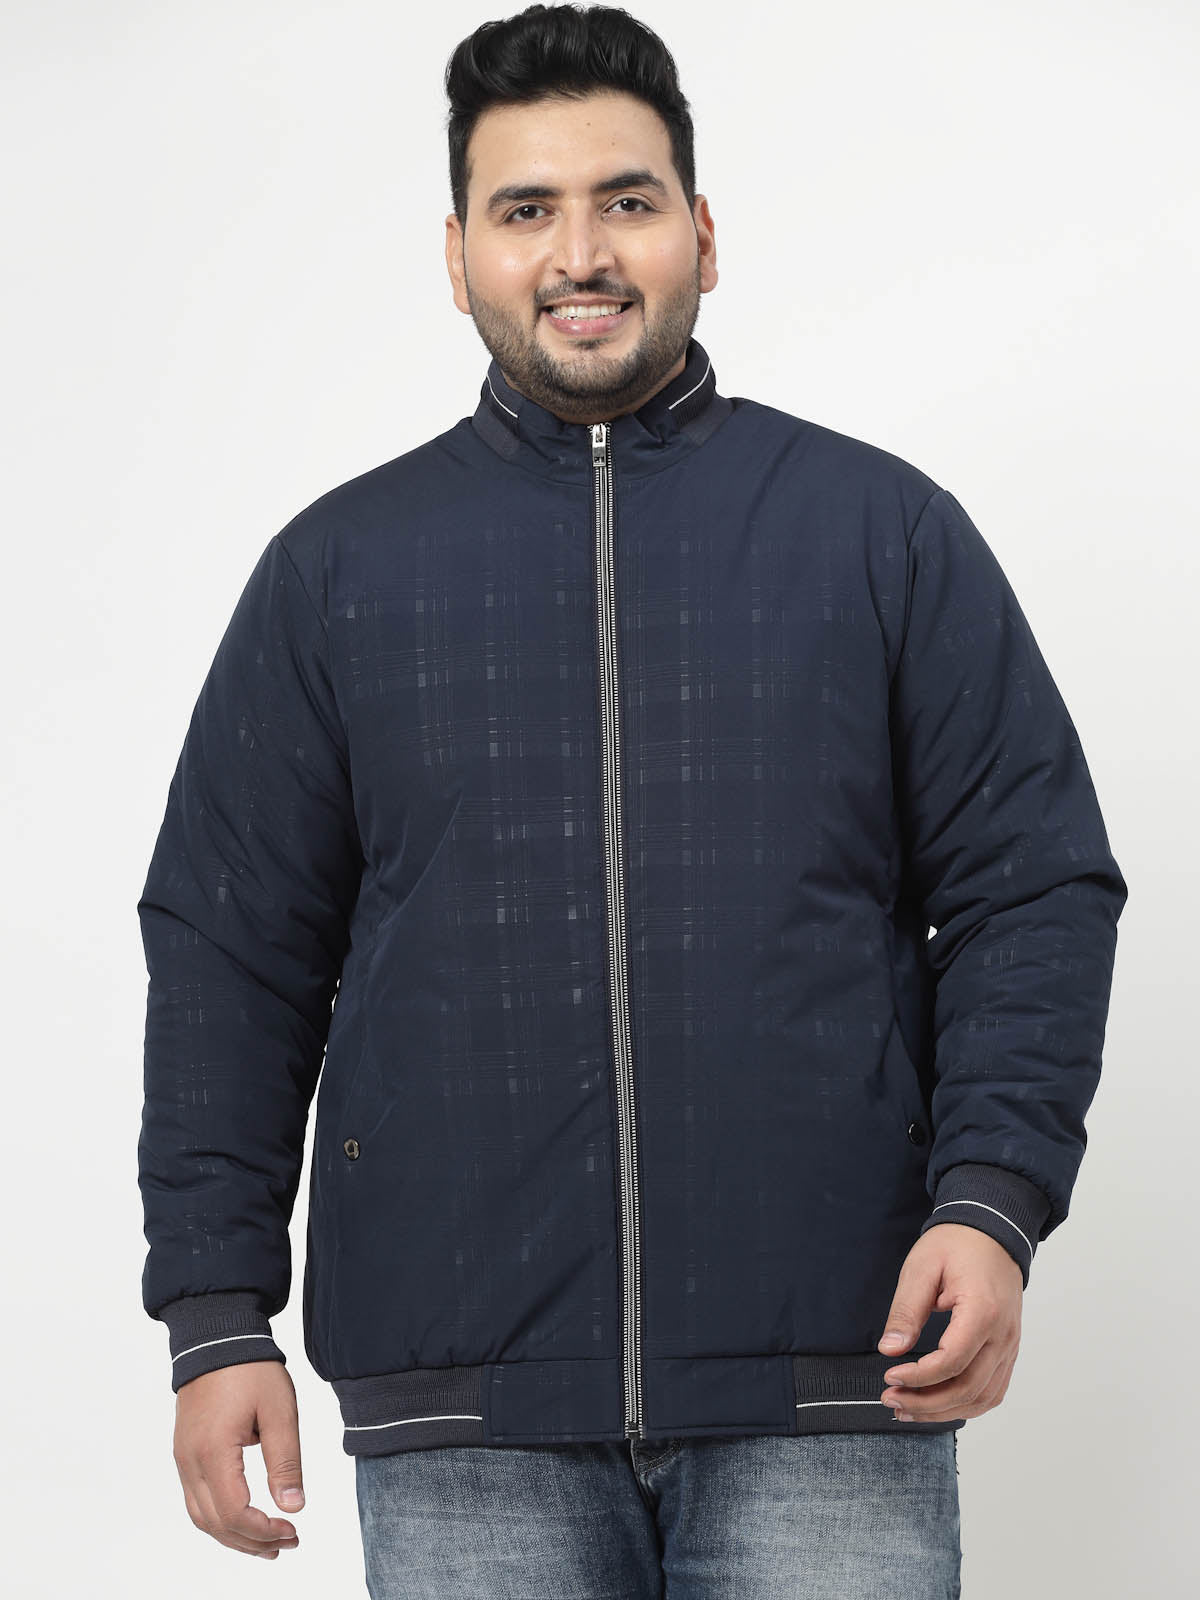 vertical 9 quilted jacket L Black zip front mock convertible collar pockets  | eBay